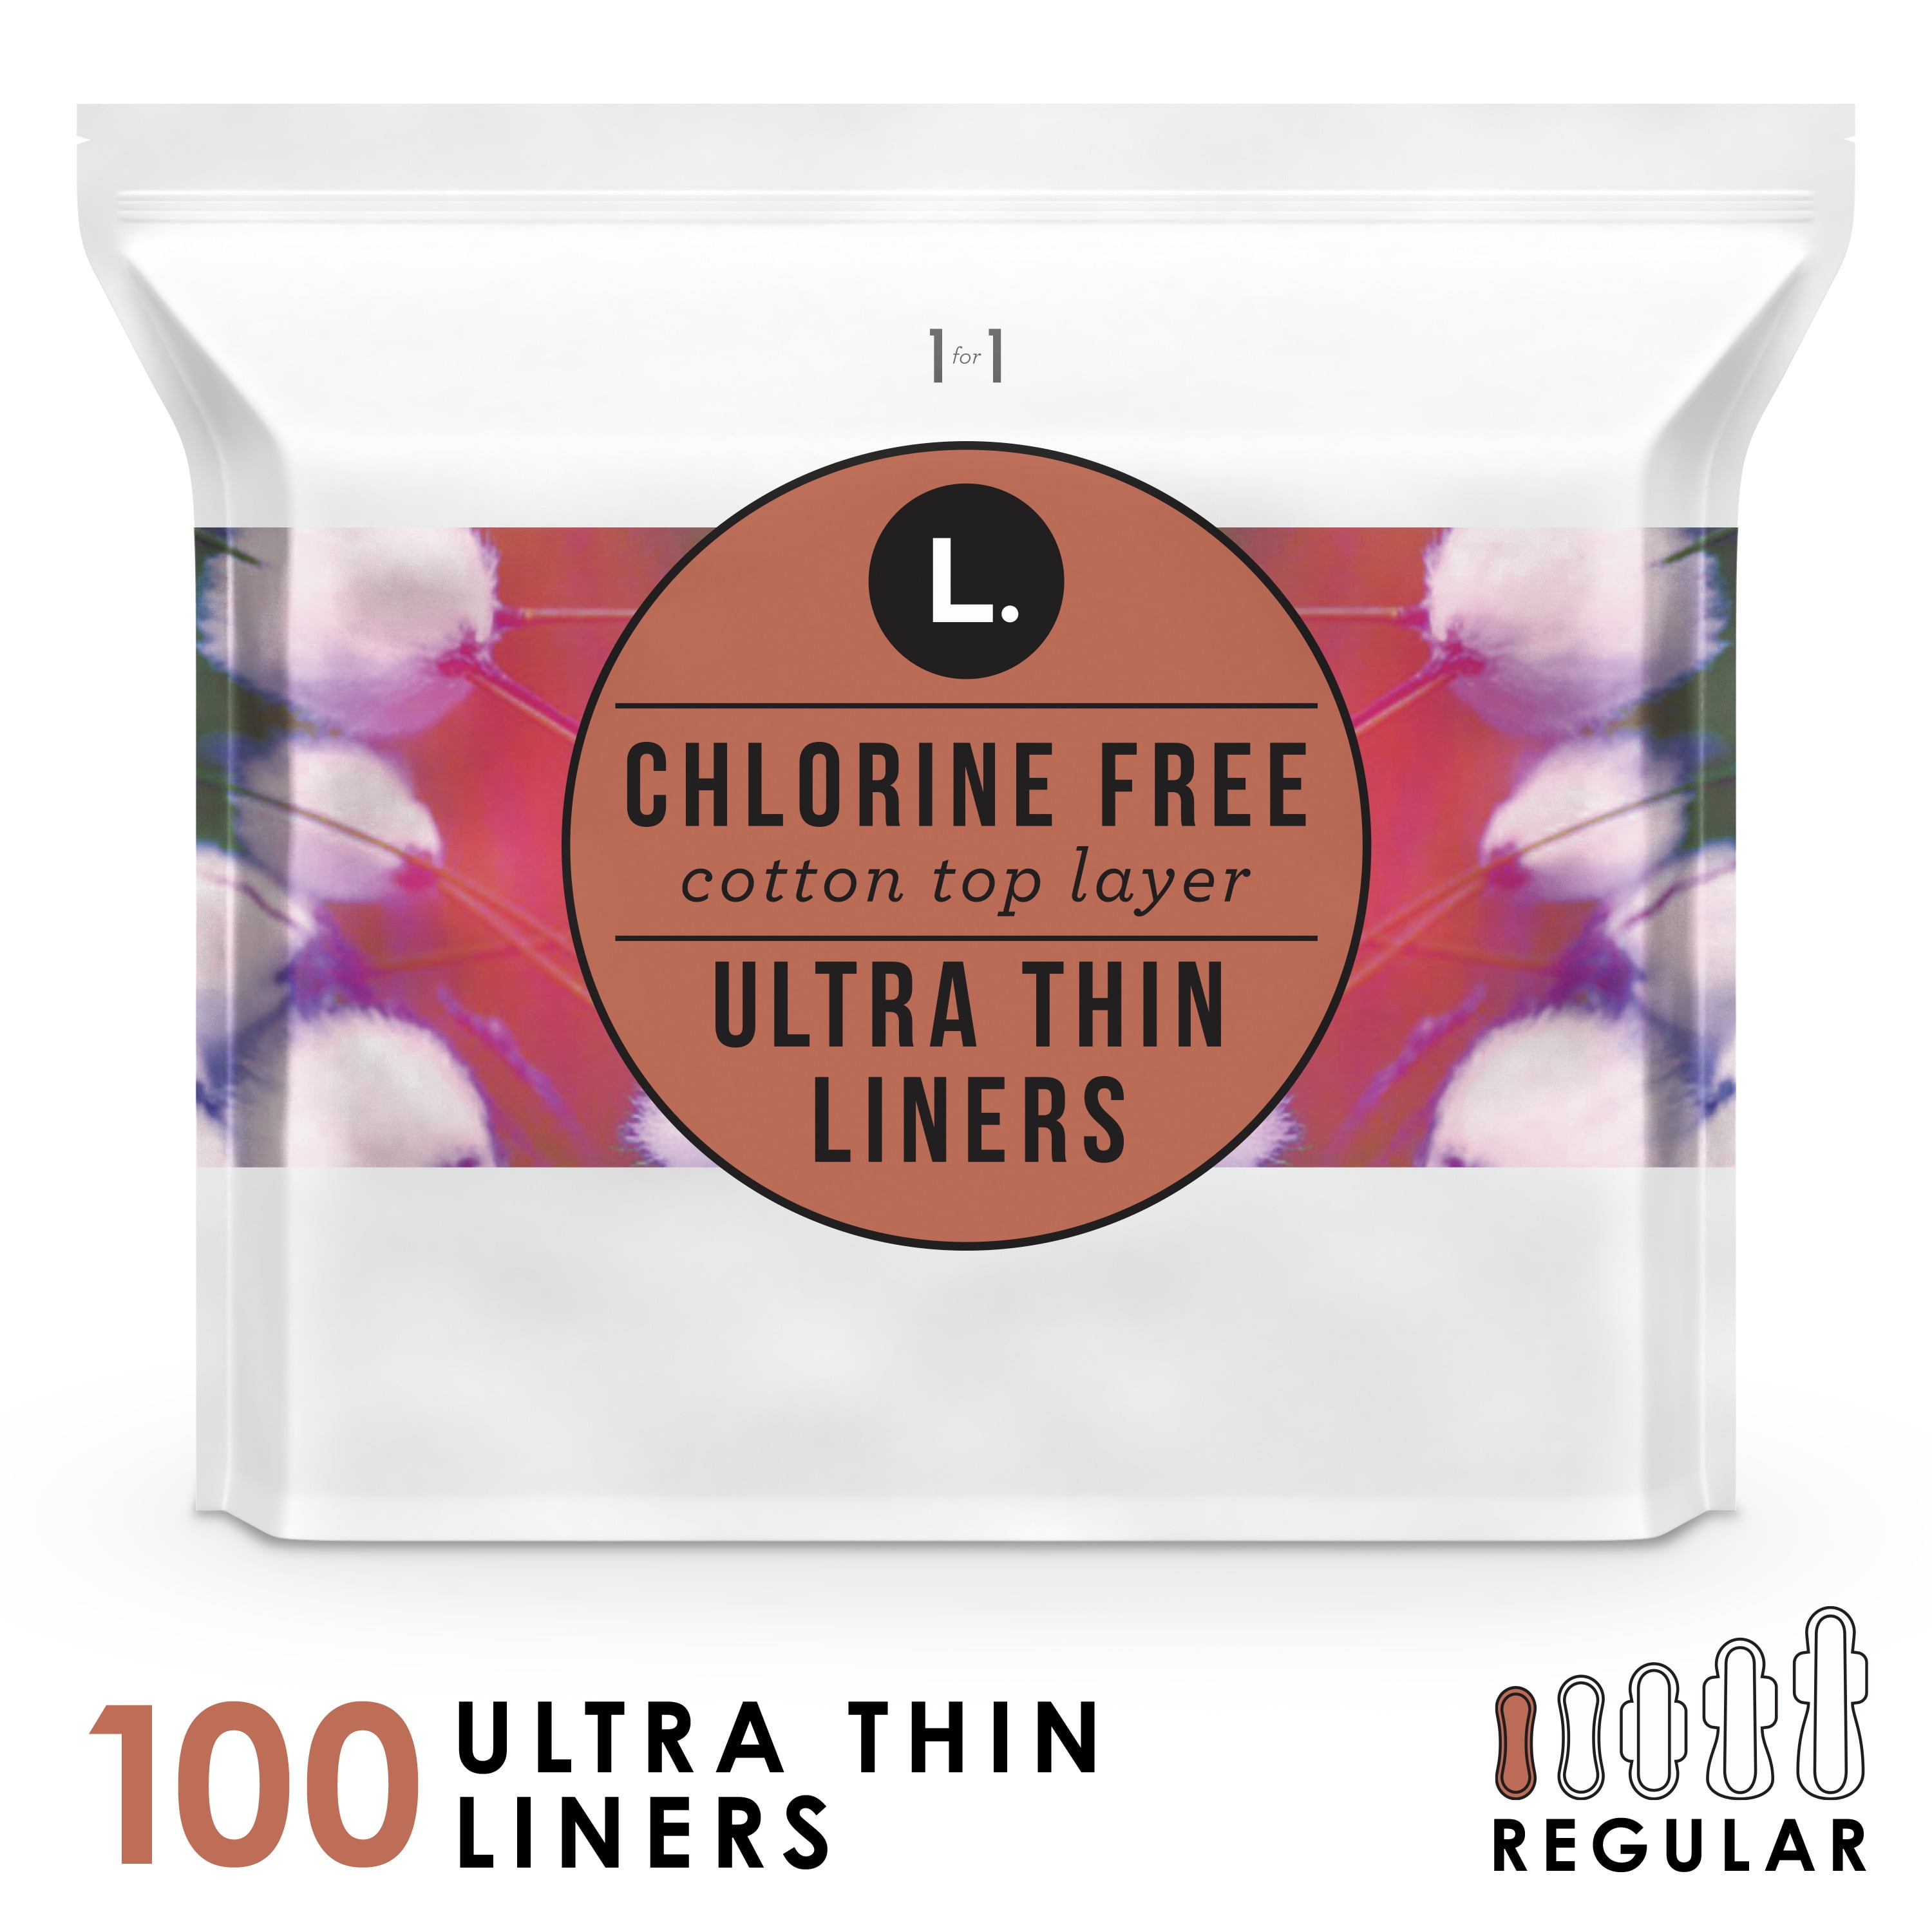 L. Chlorine Free Ultra Thin Liners, Regular Absorbency, 100 Ct